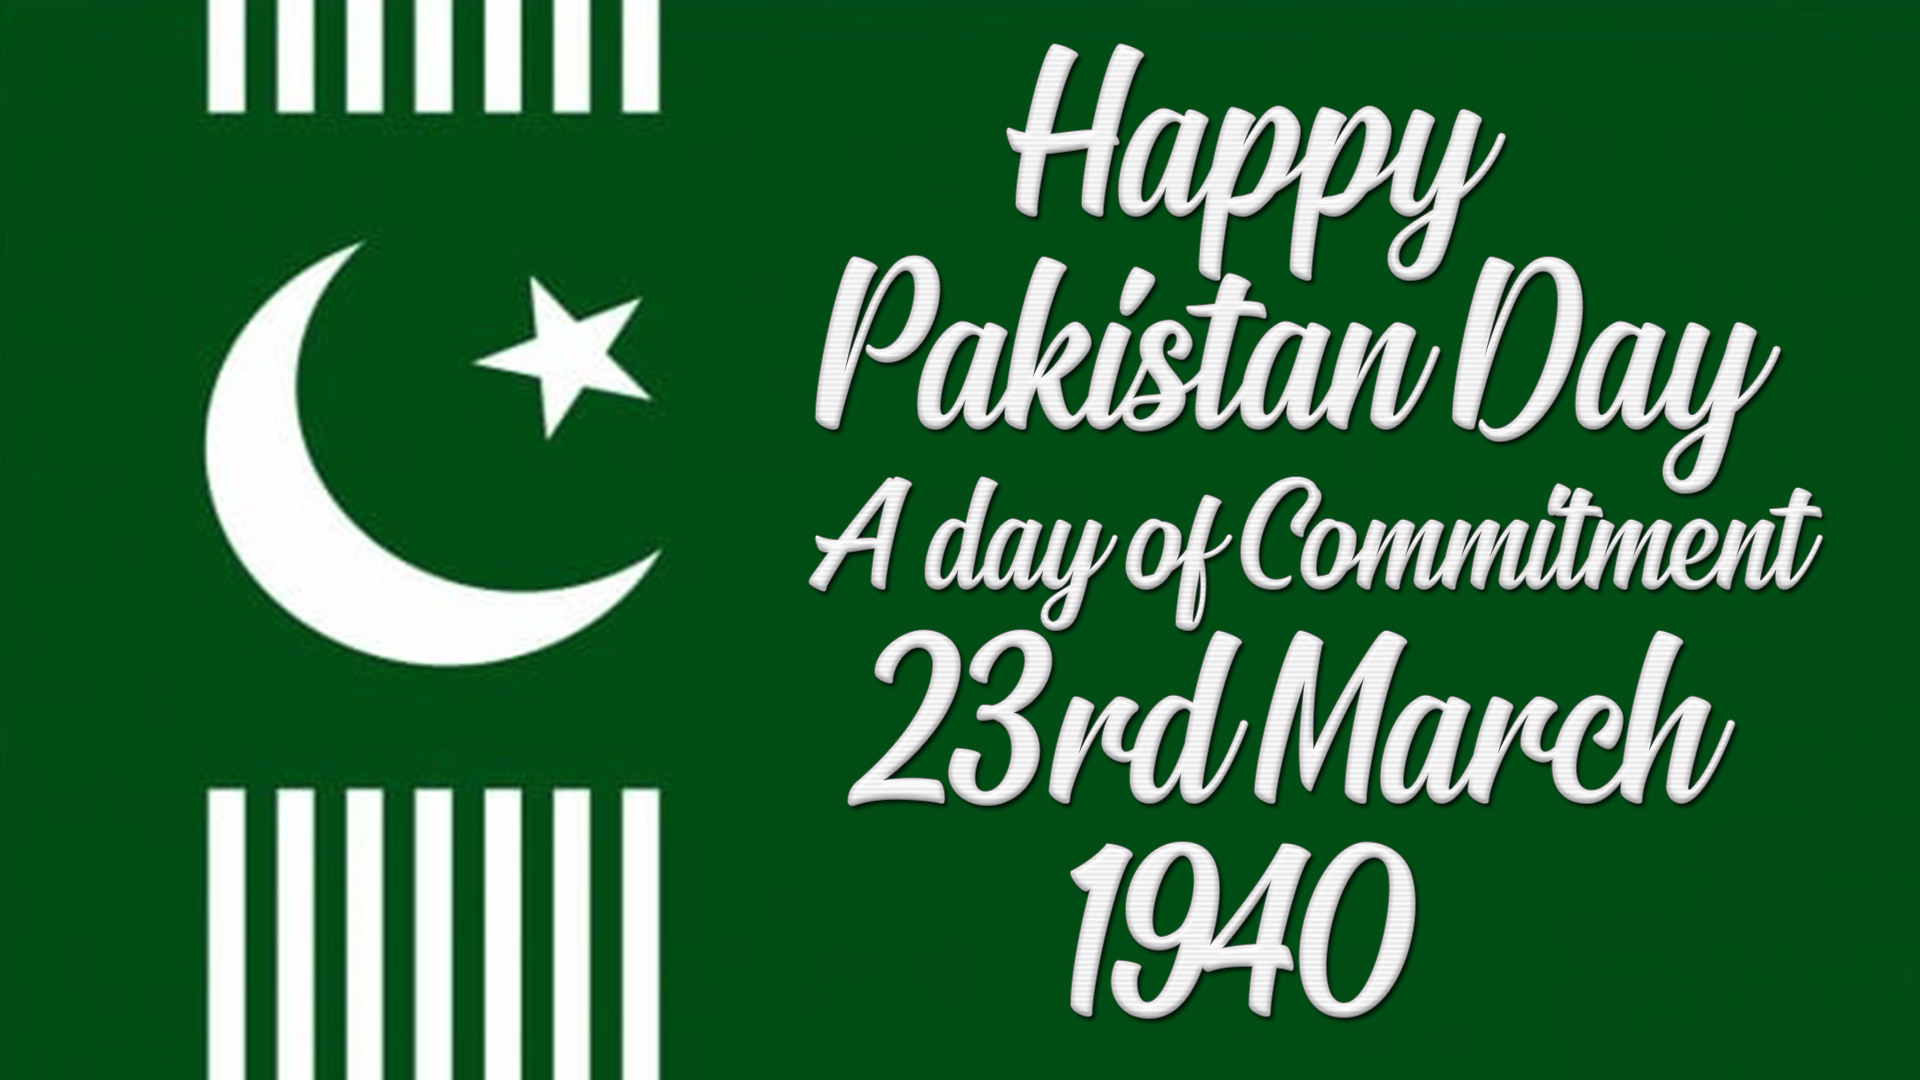 pakistan day image